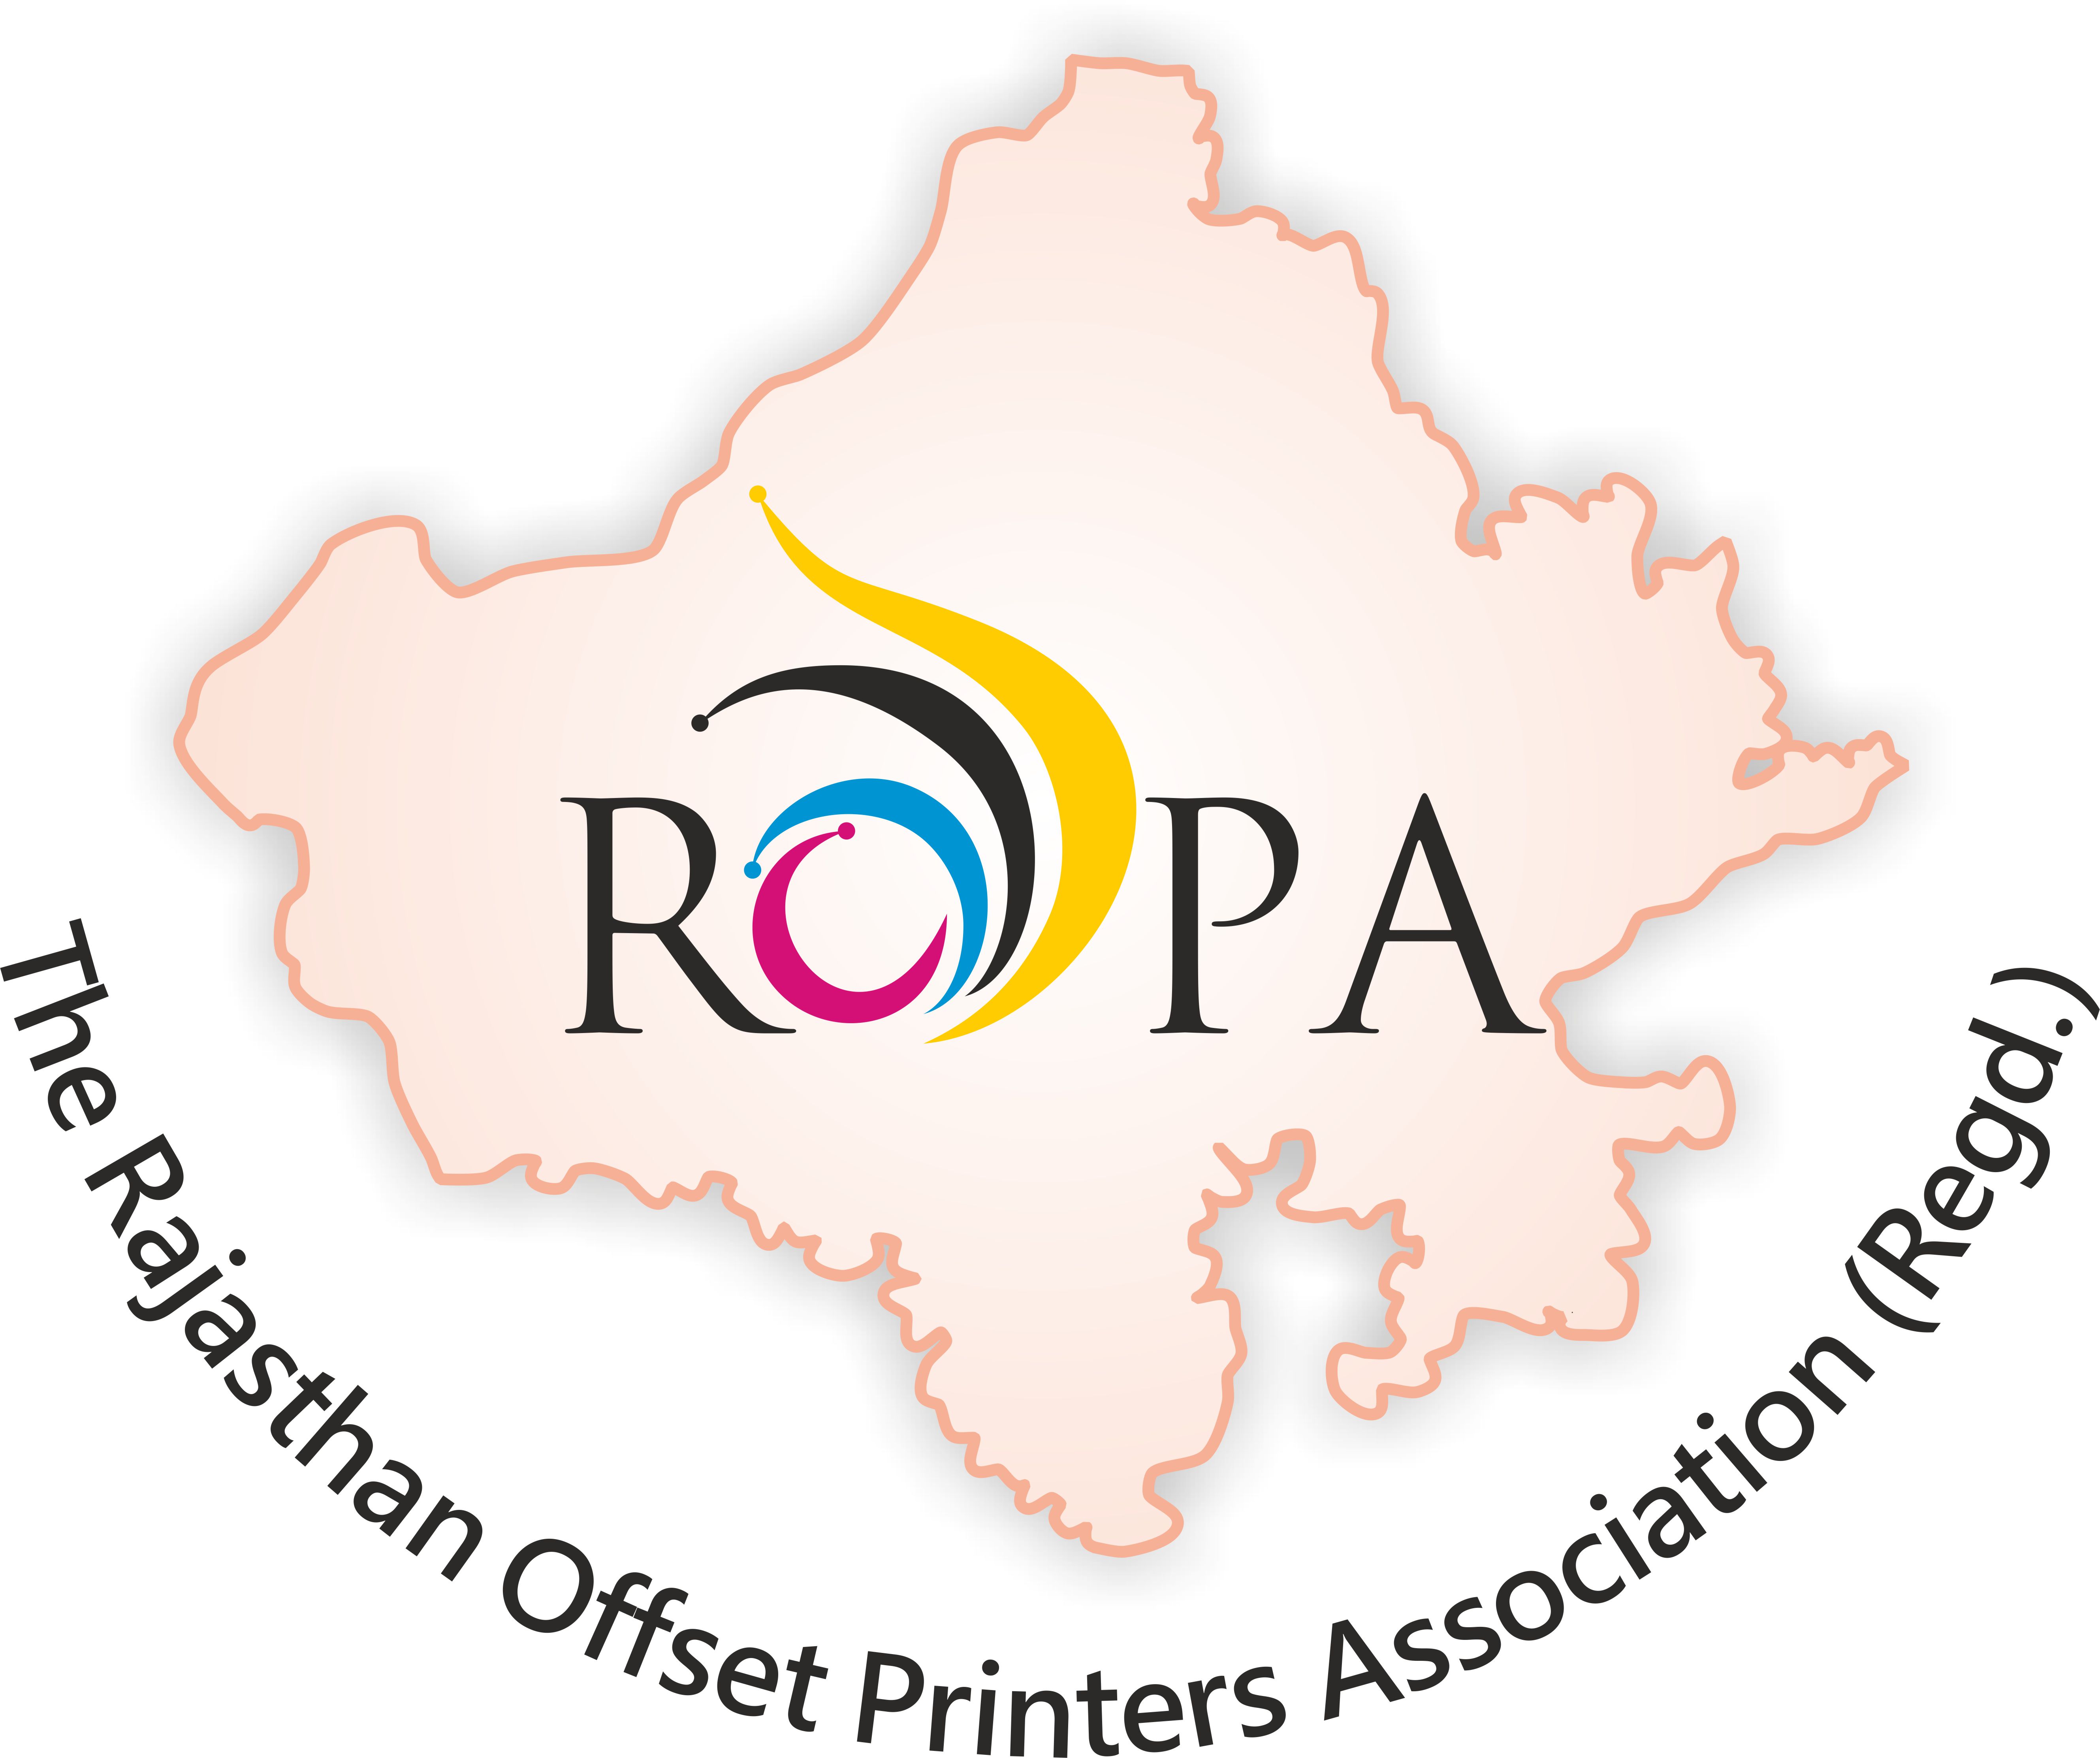 rajasthan-offset-printers-association